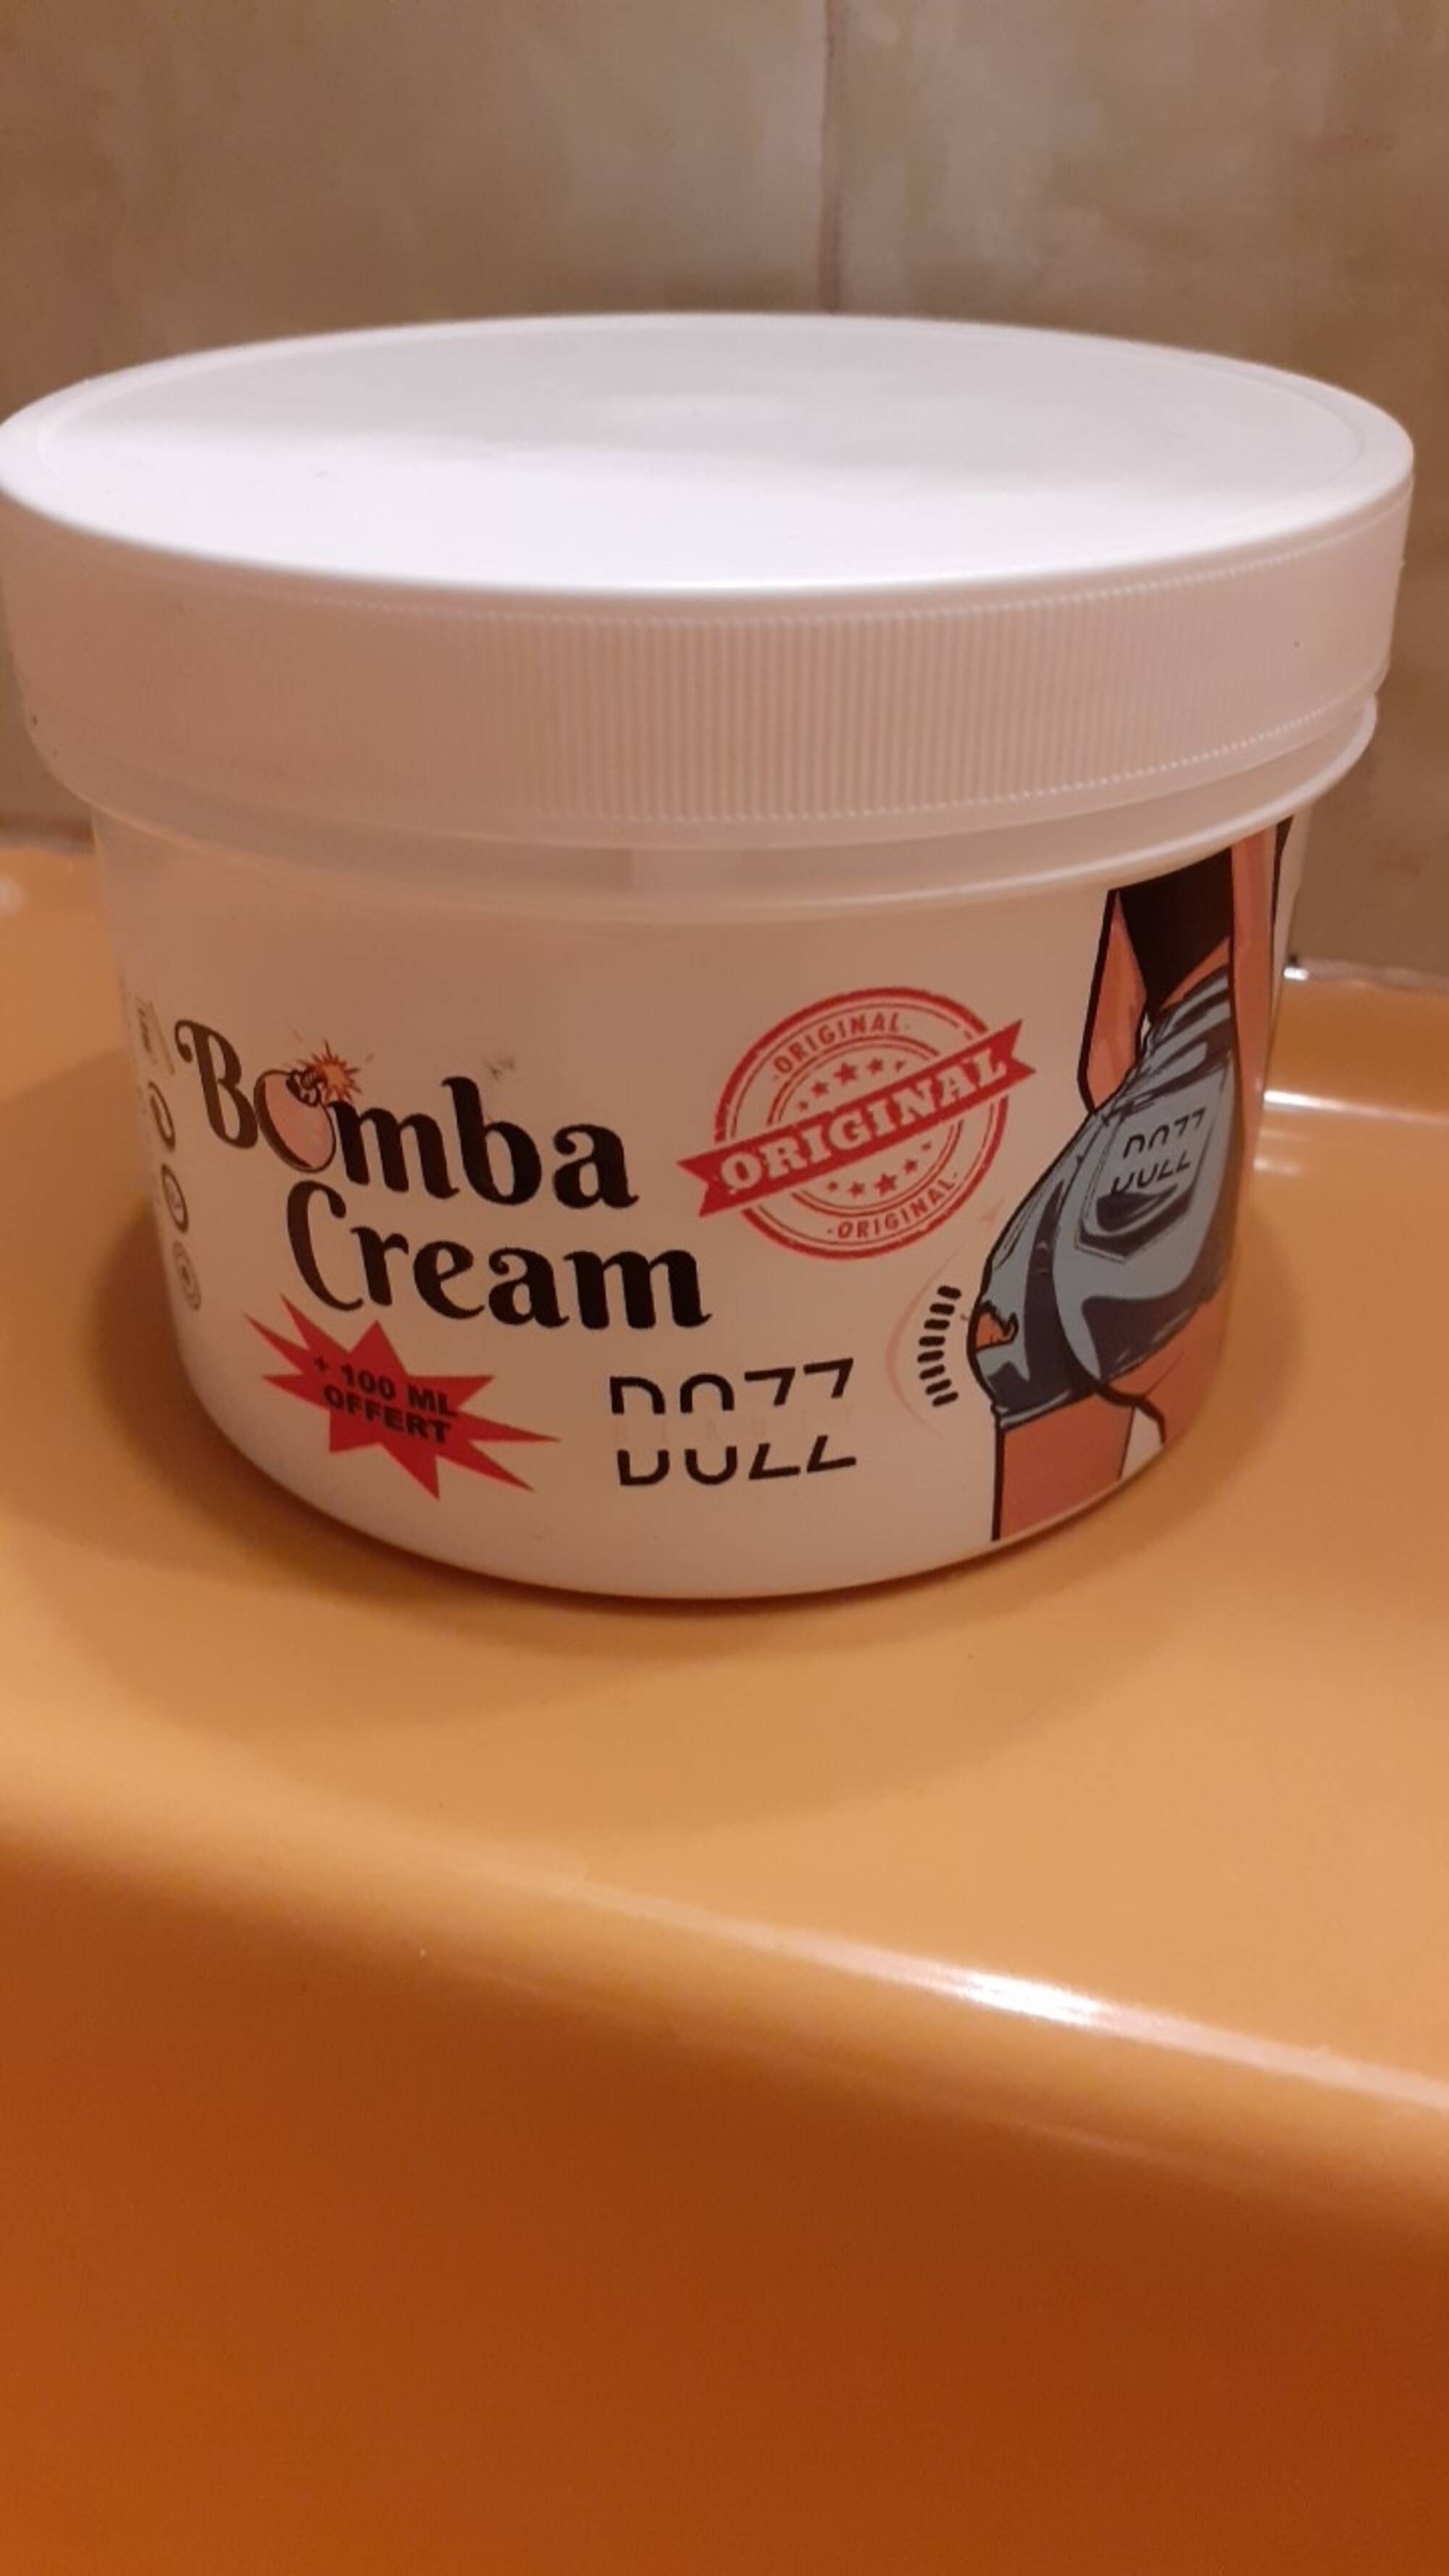 DOZZ BEAUTY - Bomba Cream